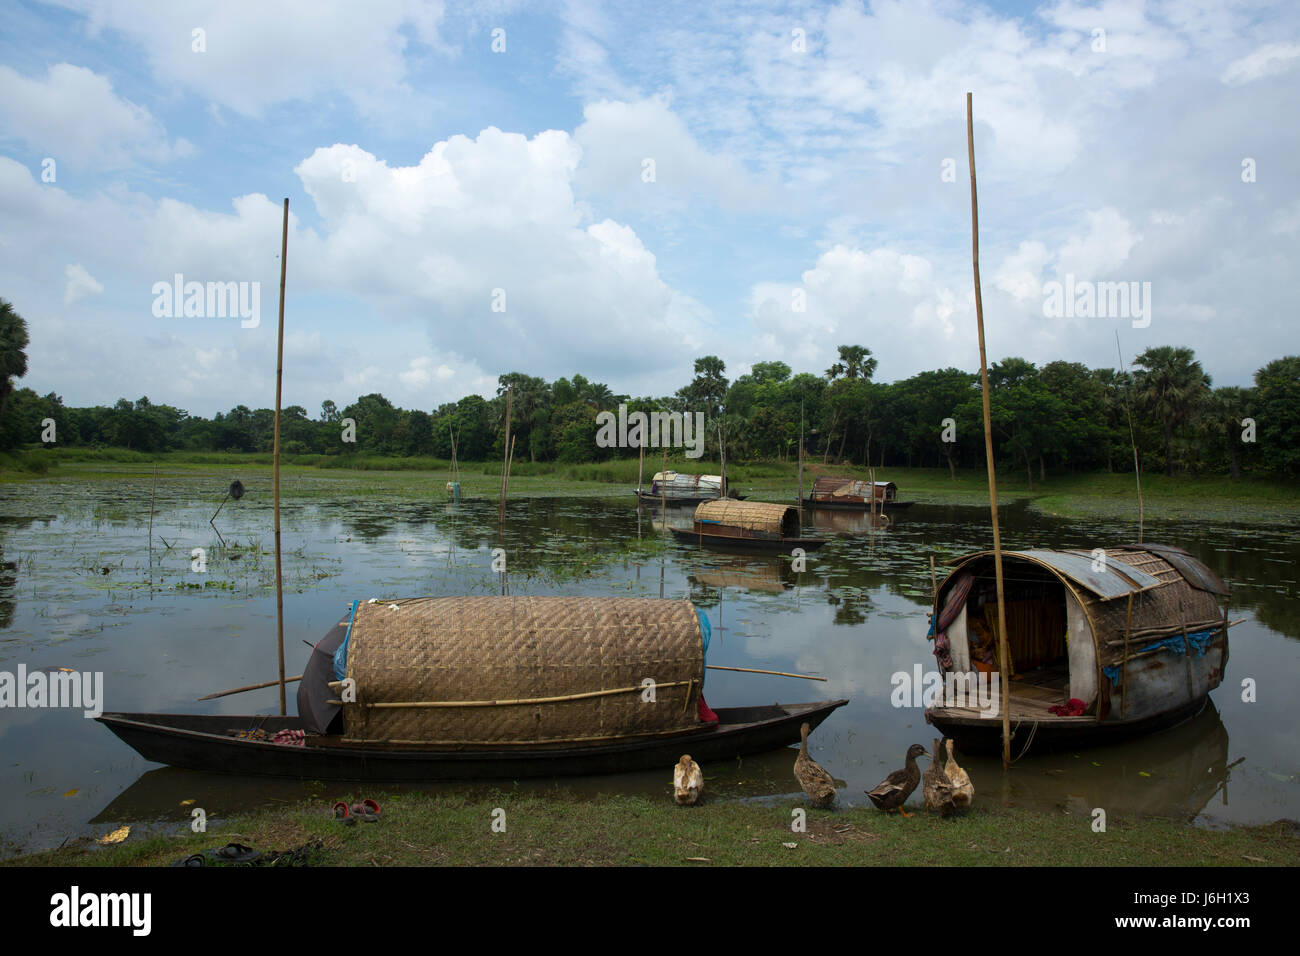 Gypsy people anchored their boats at a swamp at Pubail in Gazipur, Bangladesh. Stock Photo